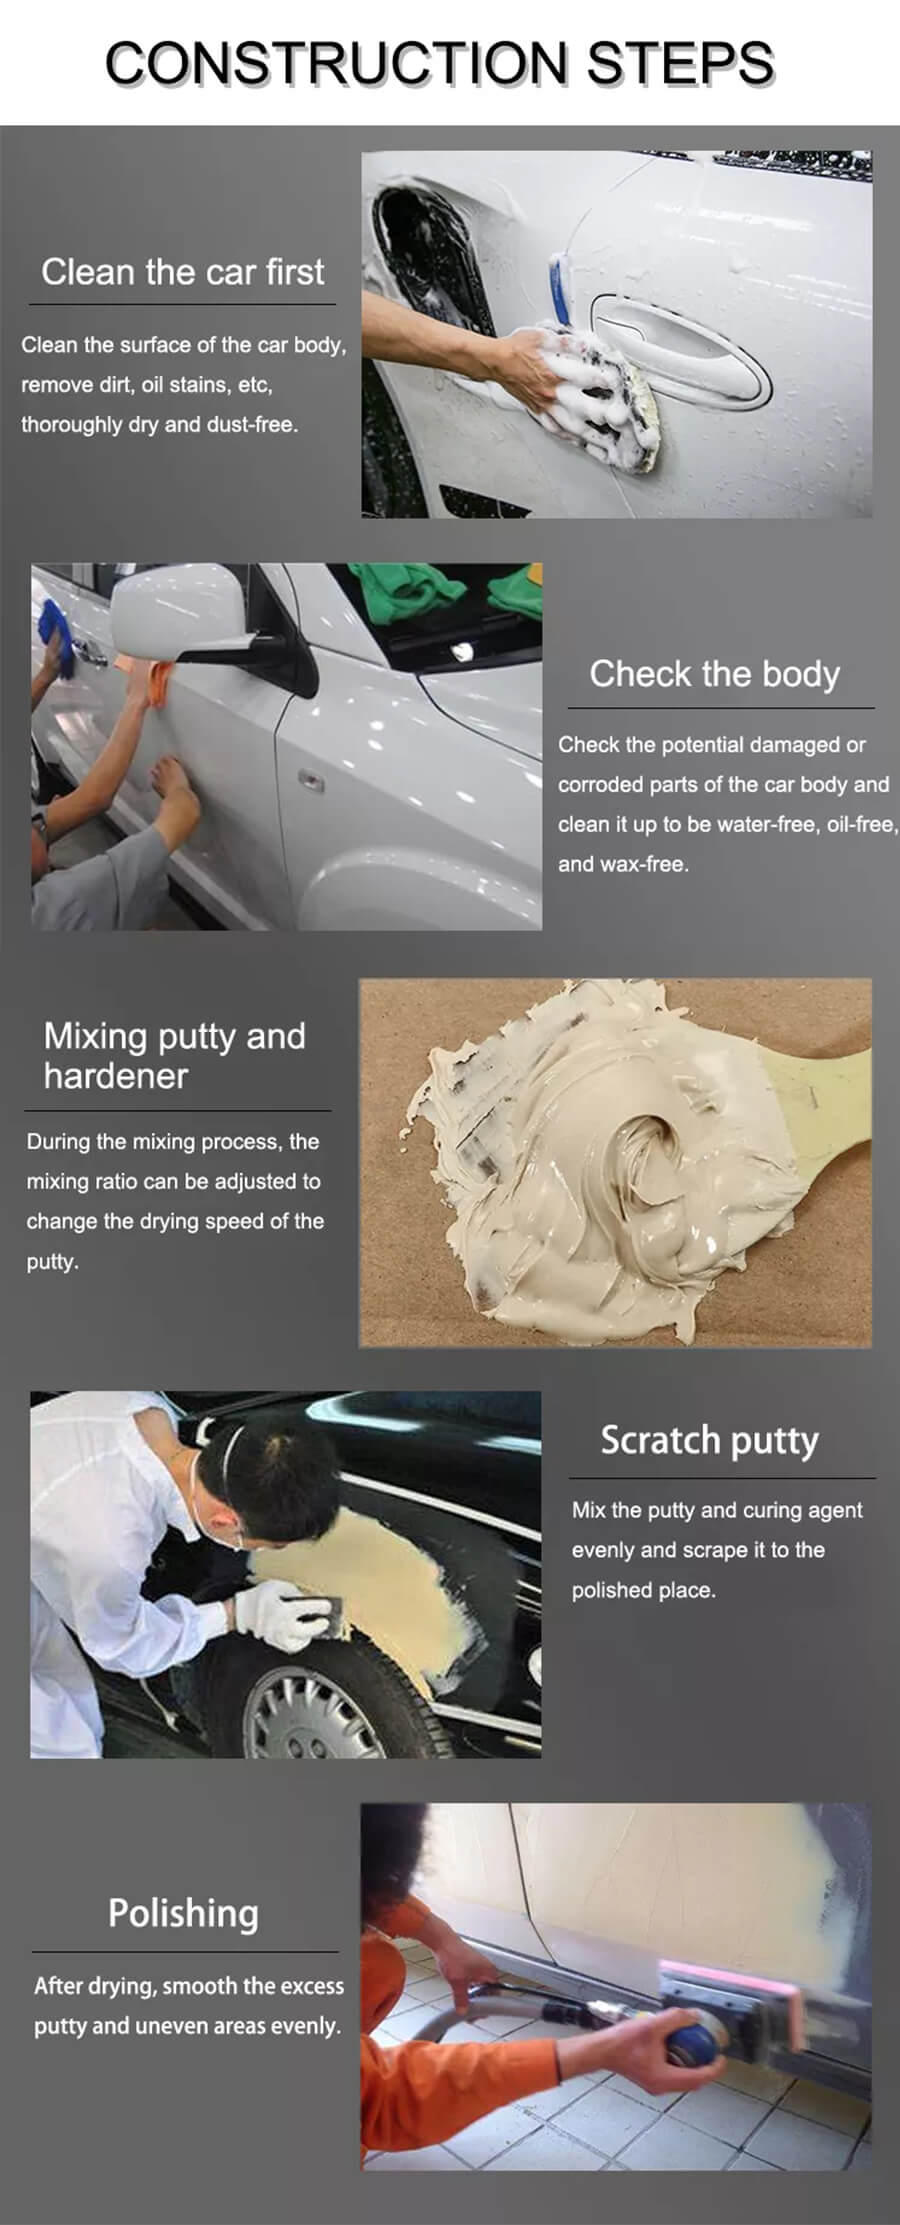 car paint car body filler polyester